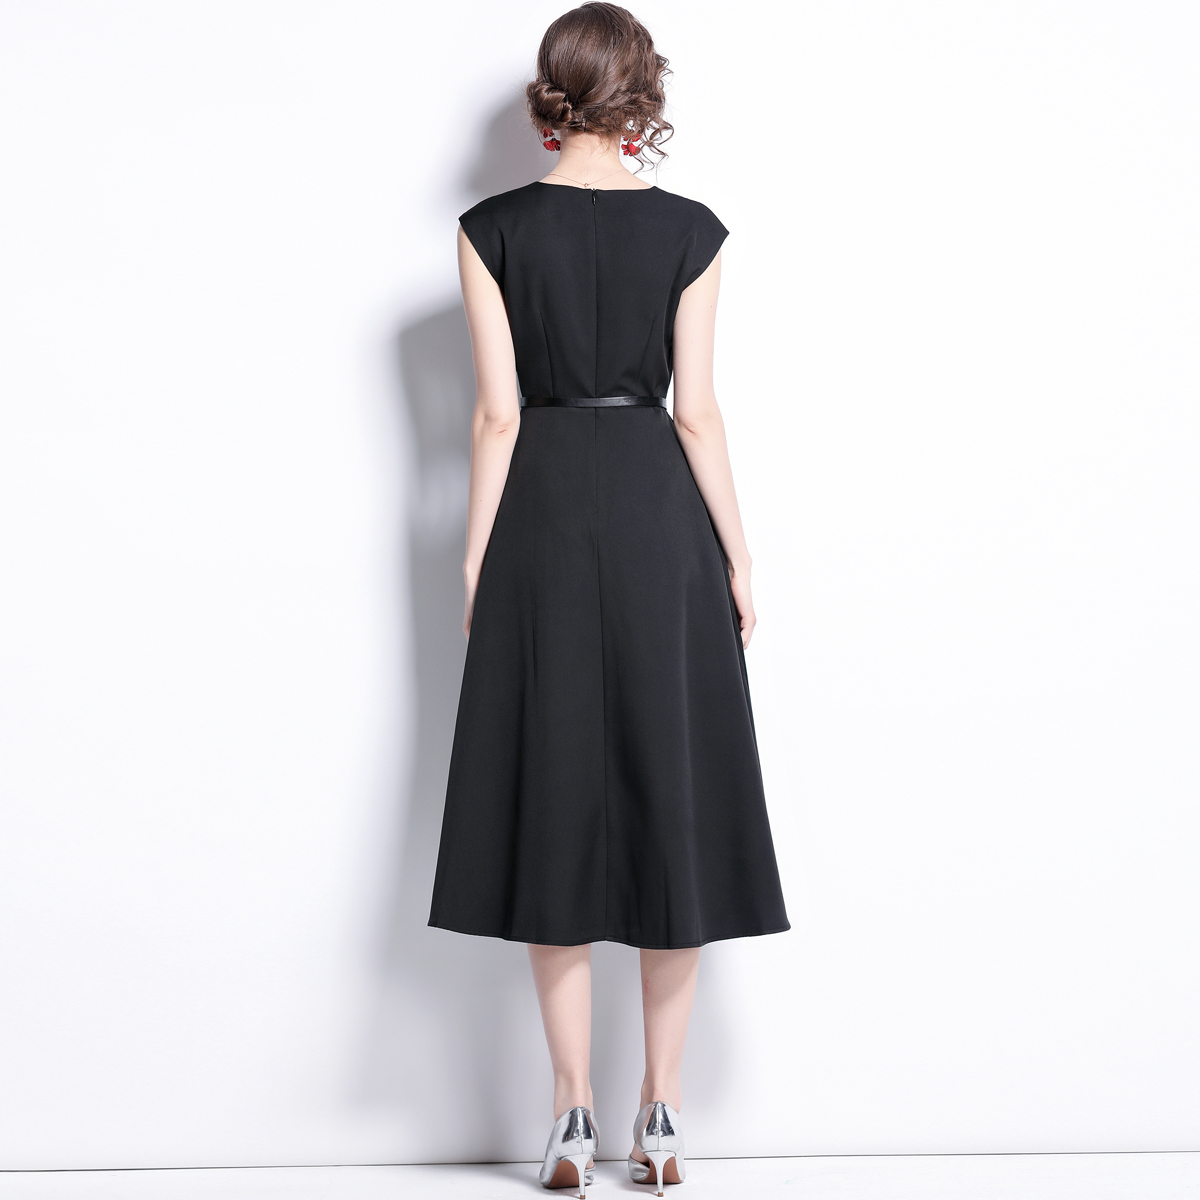 Ladies spring European style black slim dress for women